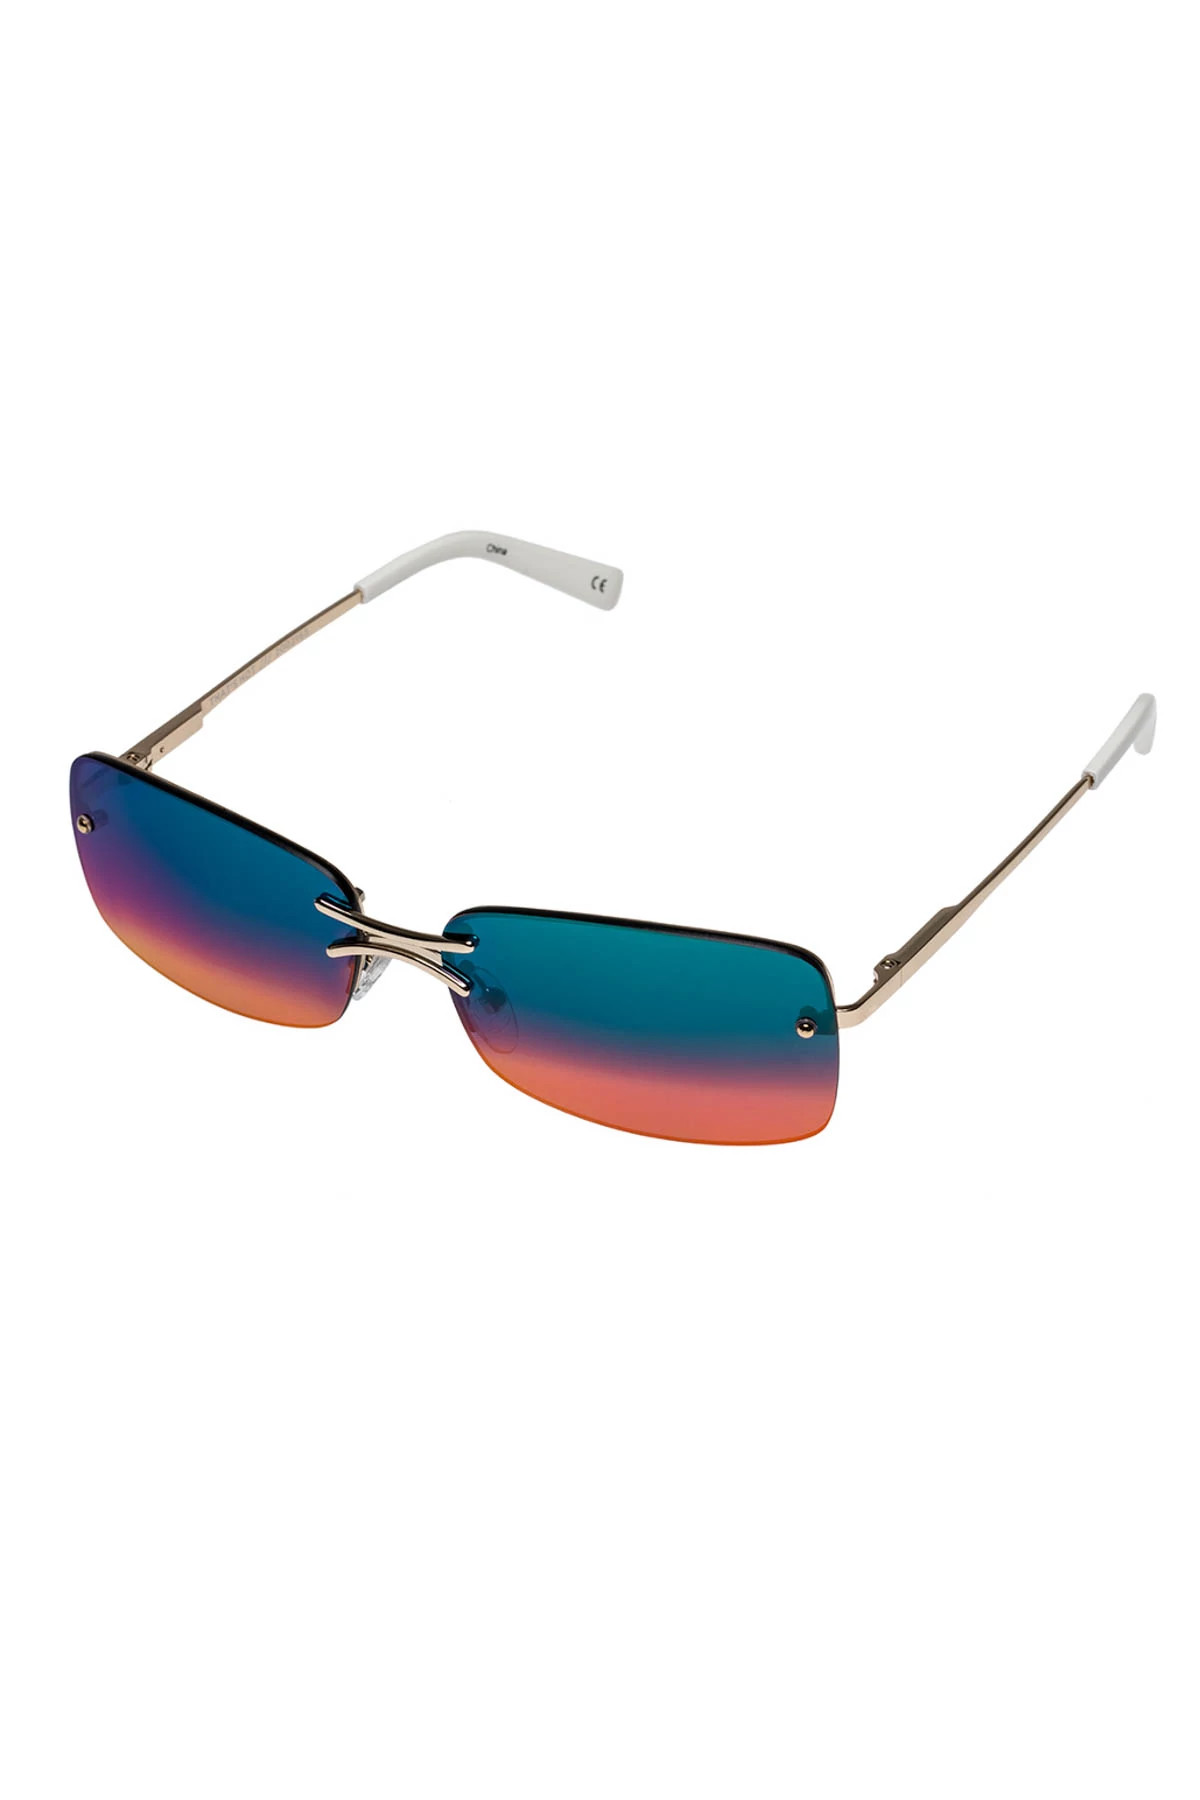 Le Specs That's Hot Rimless Sunglasses